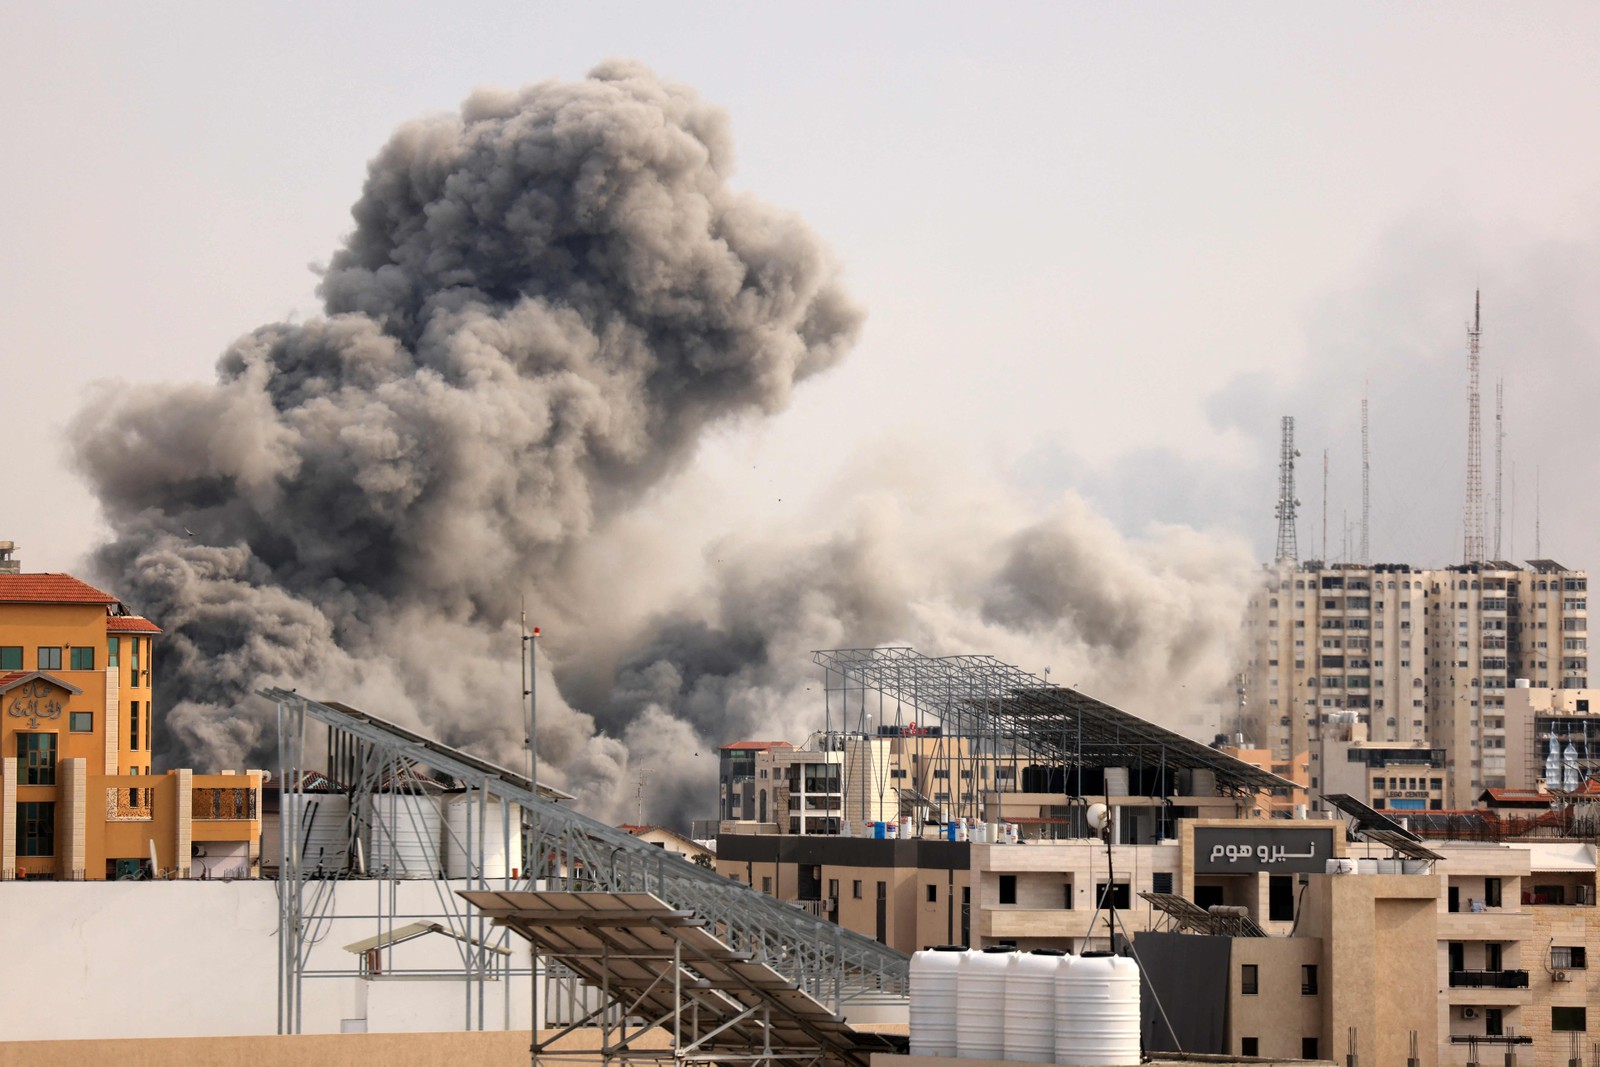 Fumaça de bombardeio israelense sobe no céu de Gaza — Foto: Mahmud Hams/AFP